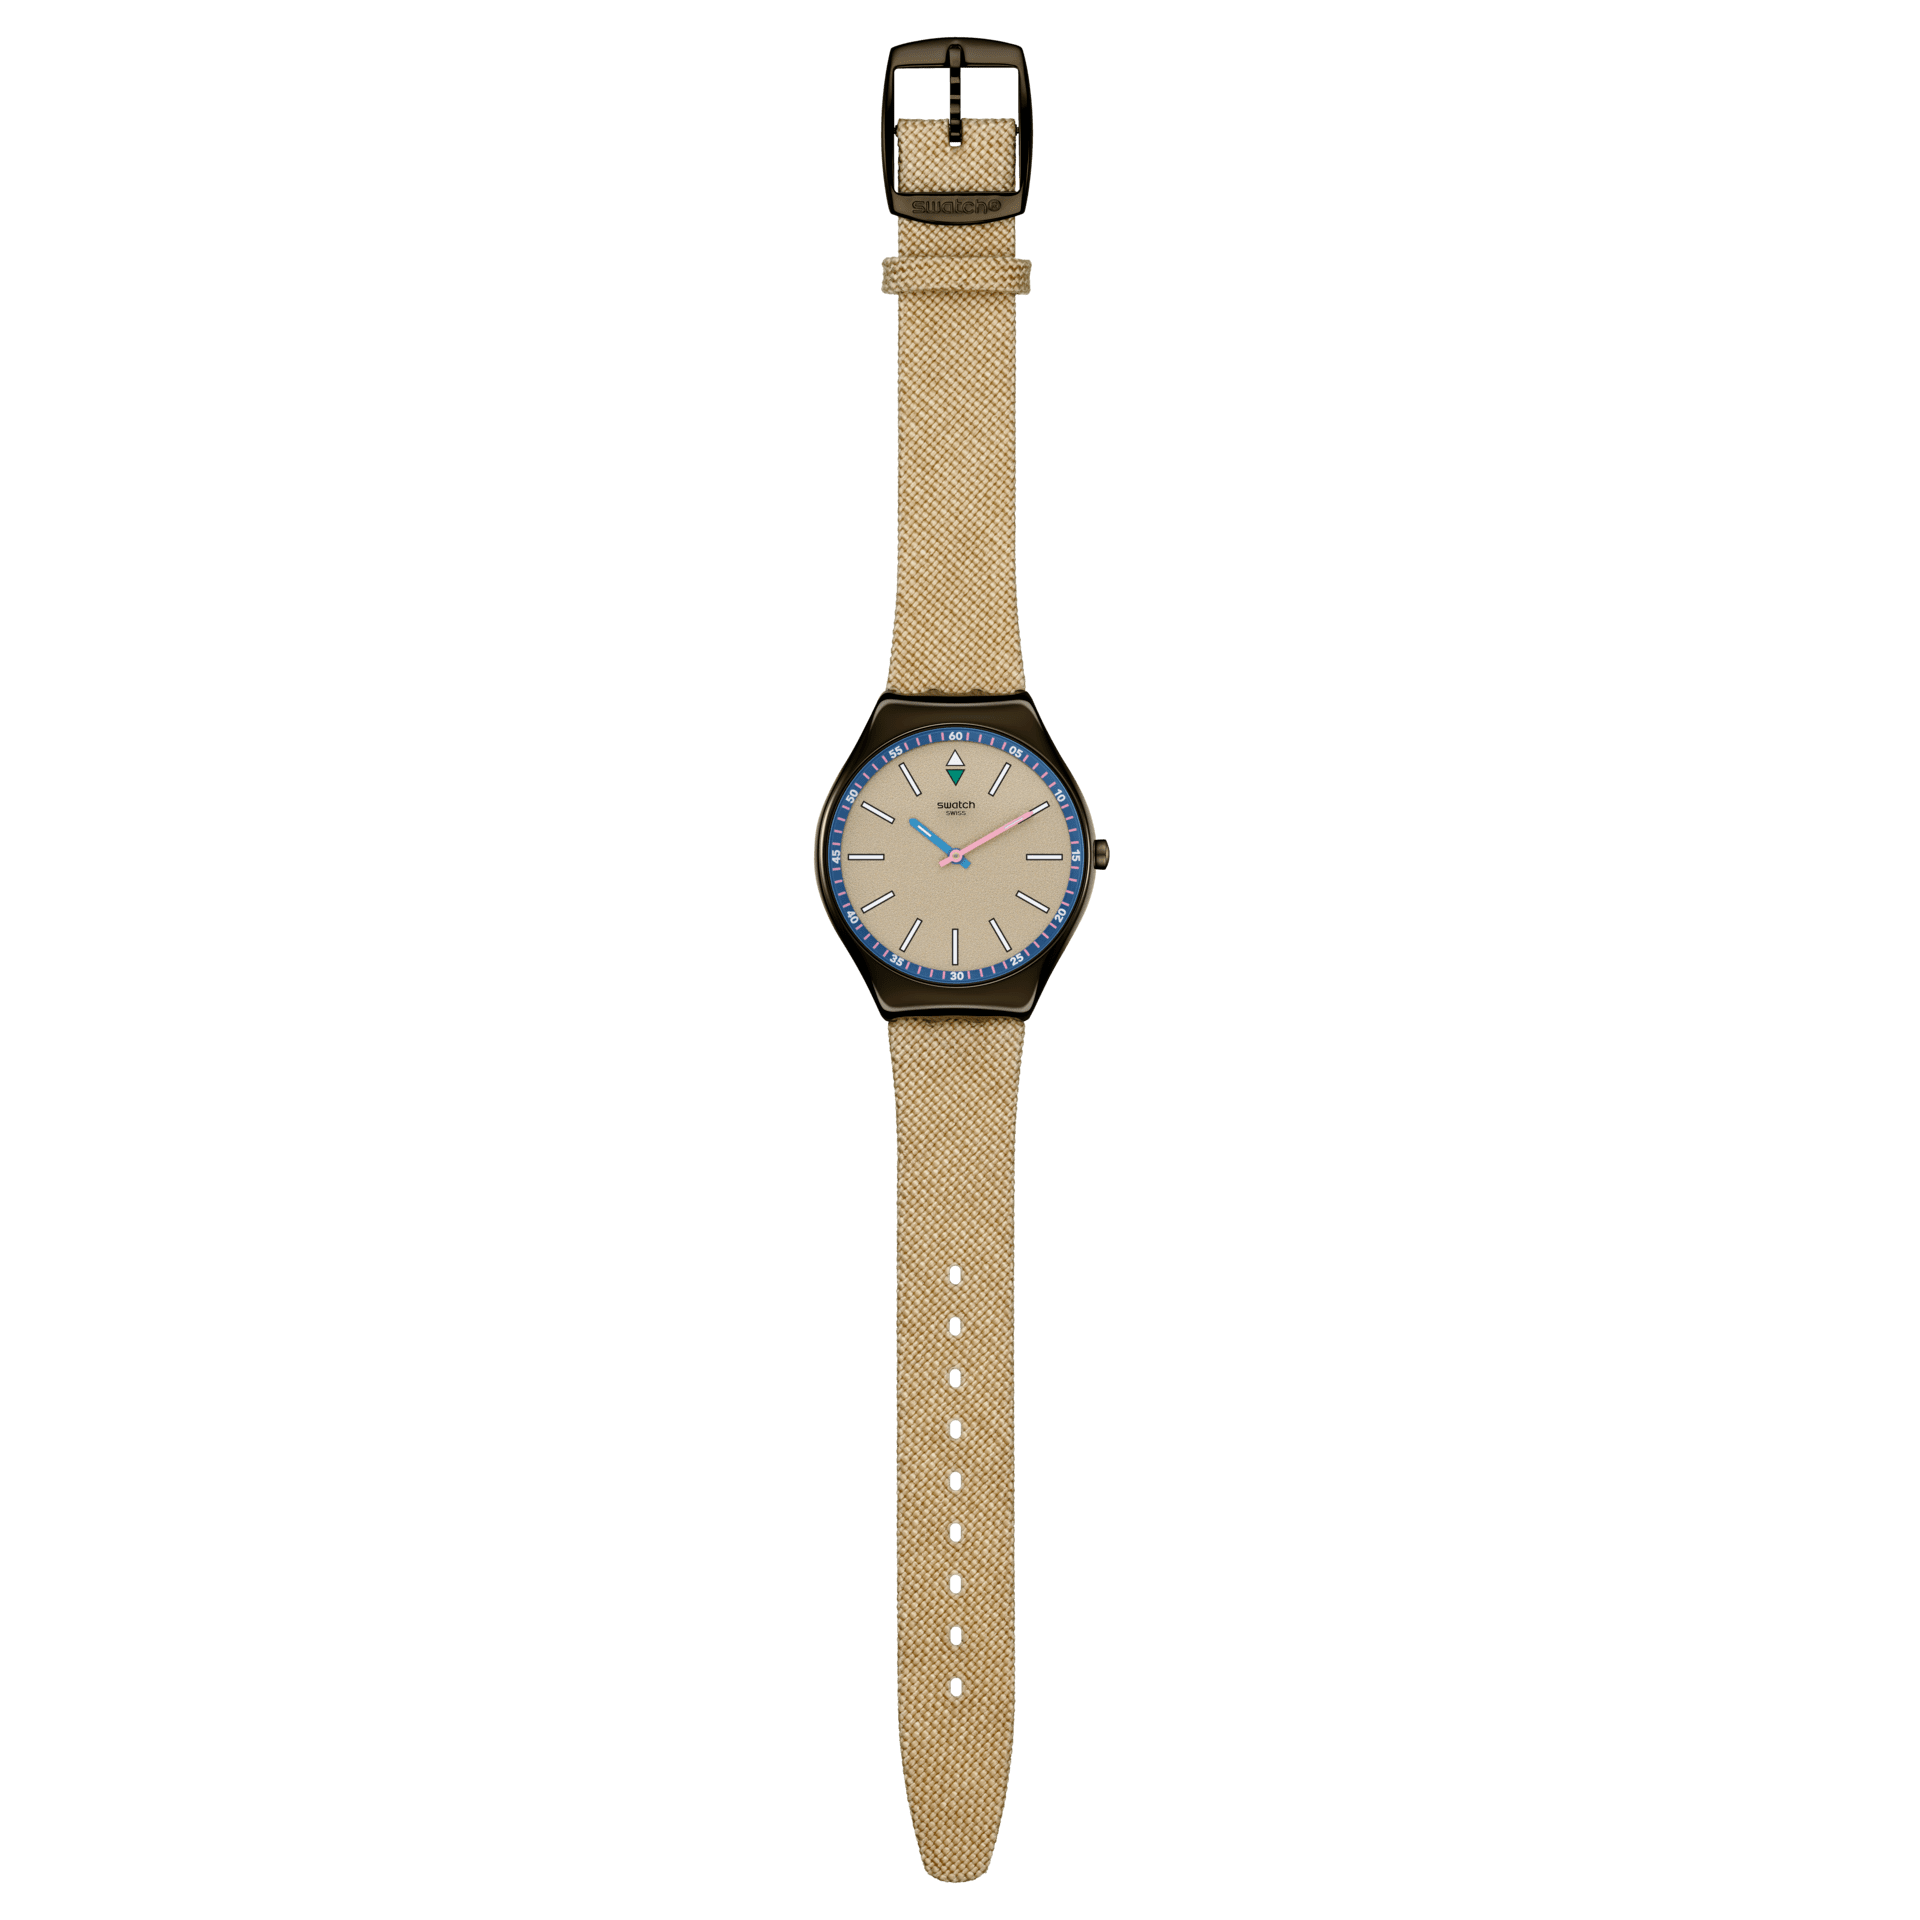 Swatch Watch Sunbaked Sandstone 38mm